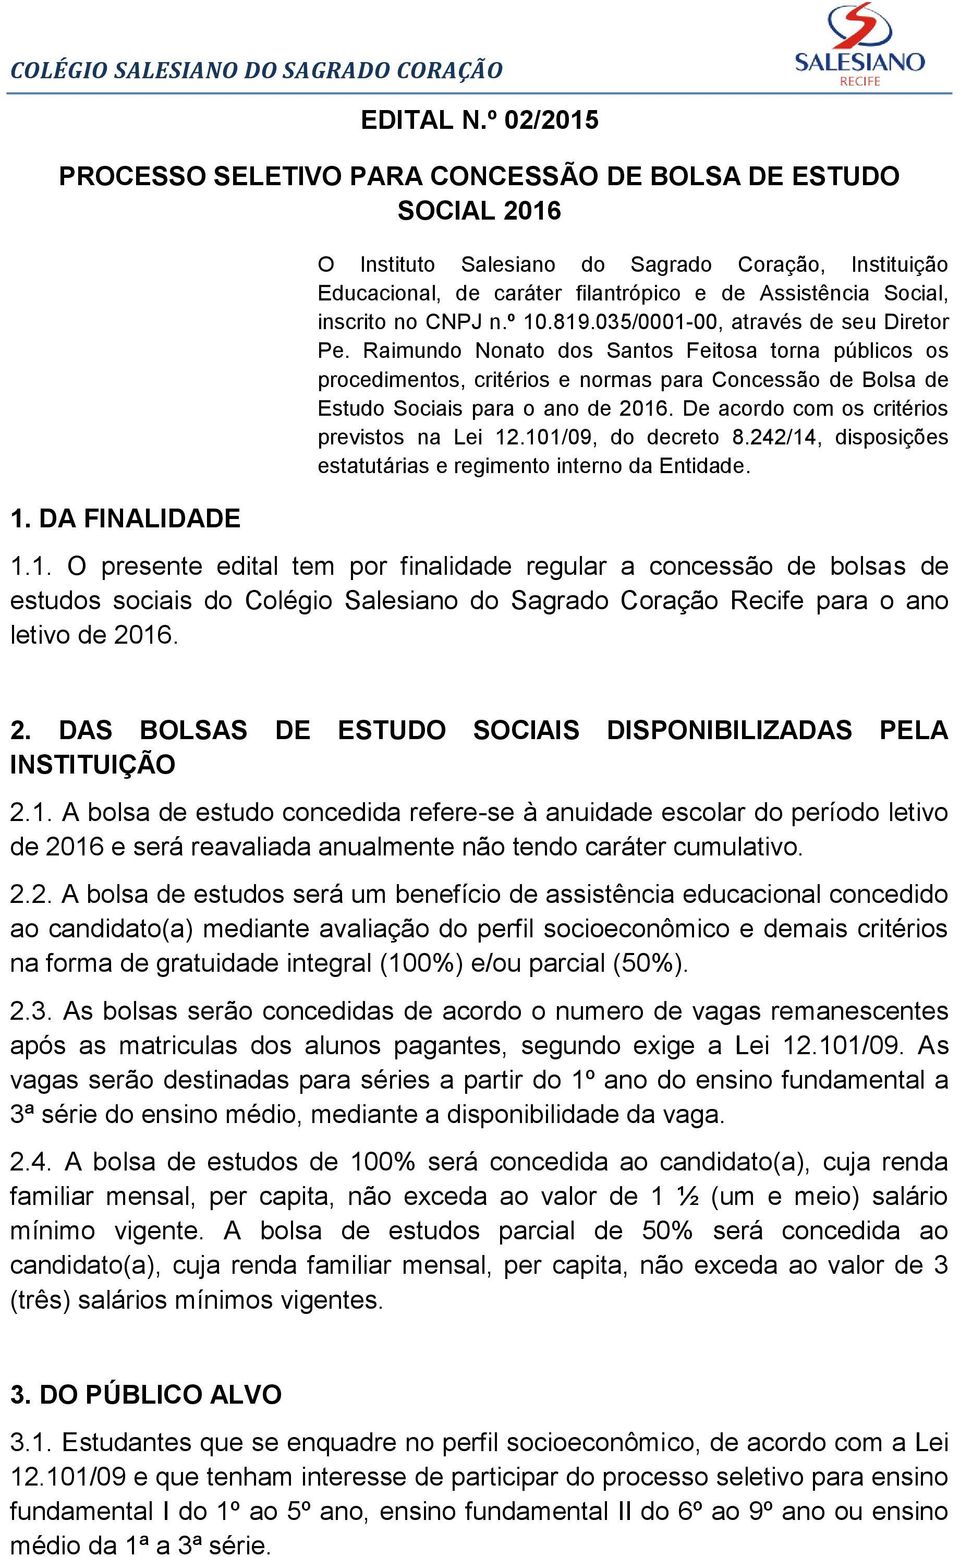 Raimundo Nonato dos Santos Feitosa torna públicos os procedimentos, critérios e normas para Concessão de Bolsa de Estudo Sociais para o ano de 2016. De acordo com os critérios previstos na Lei 12.